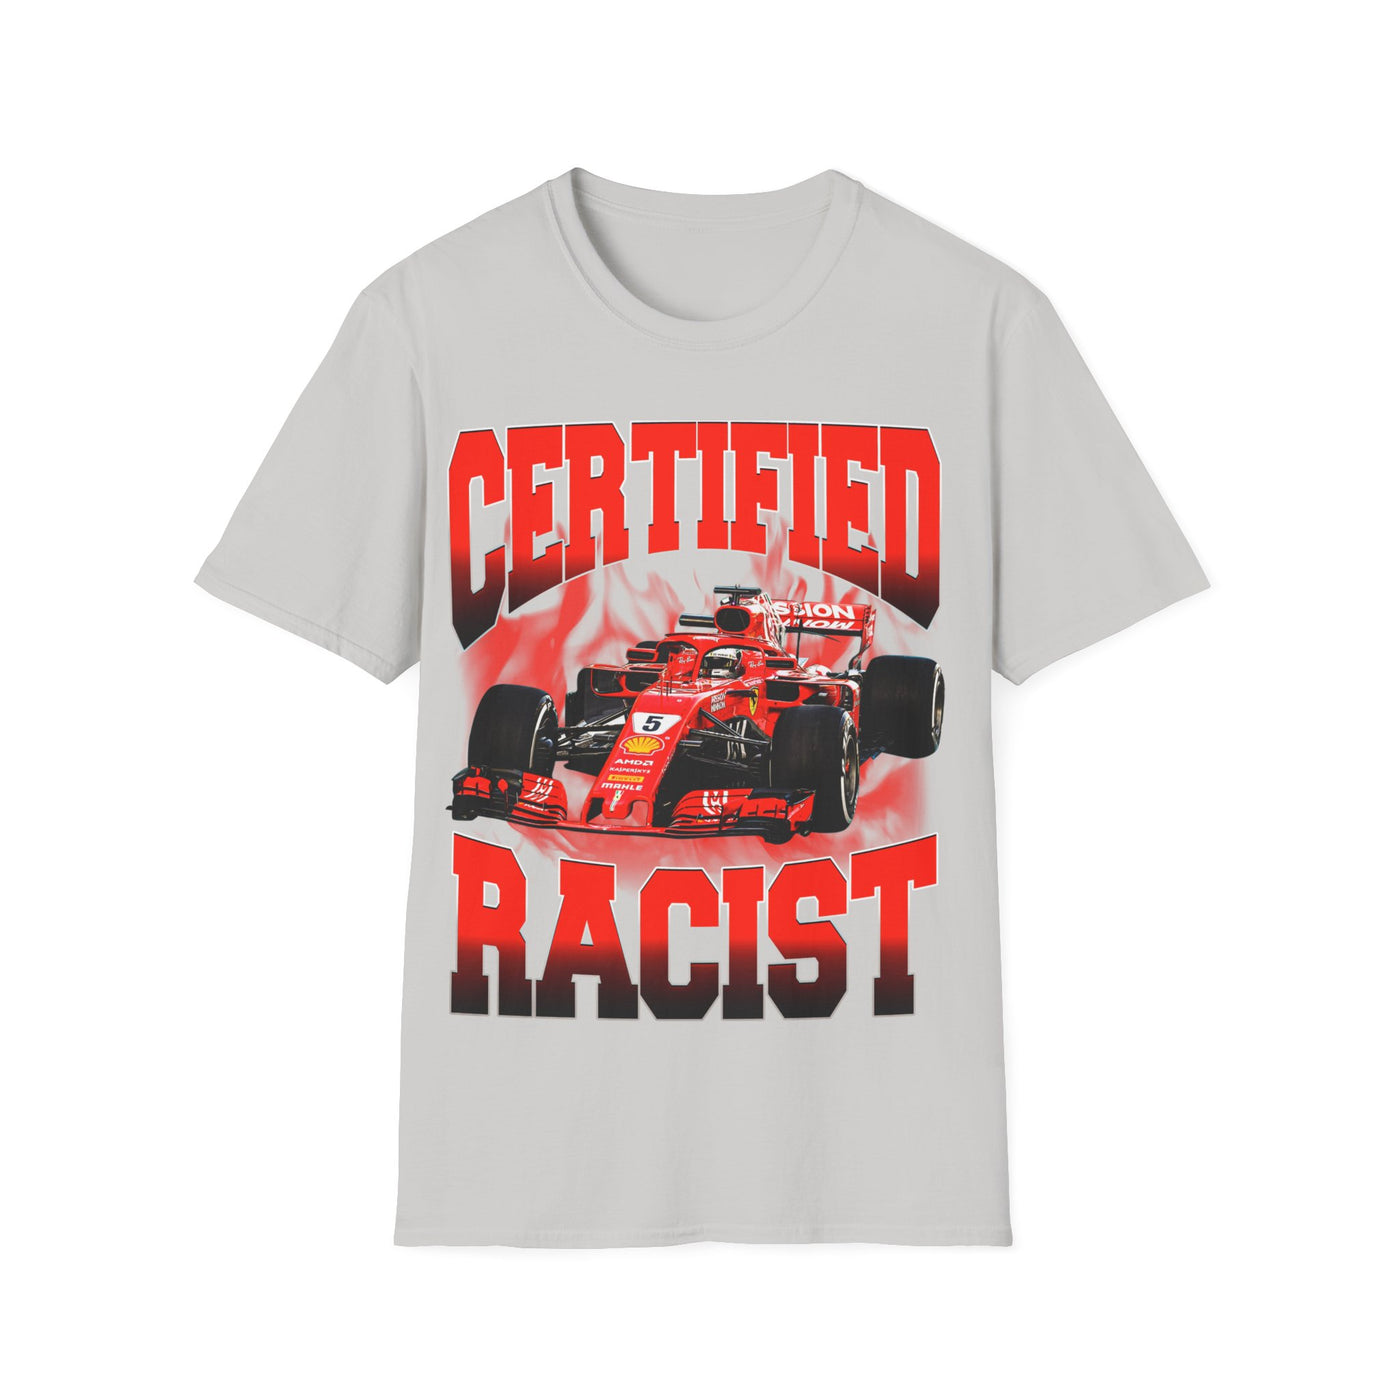 Certified Racist